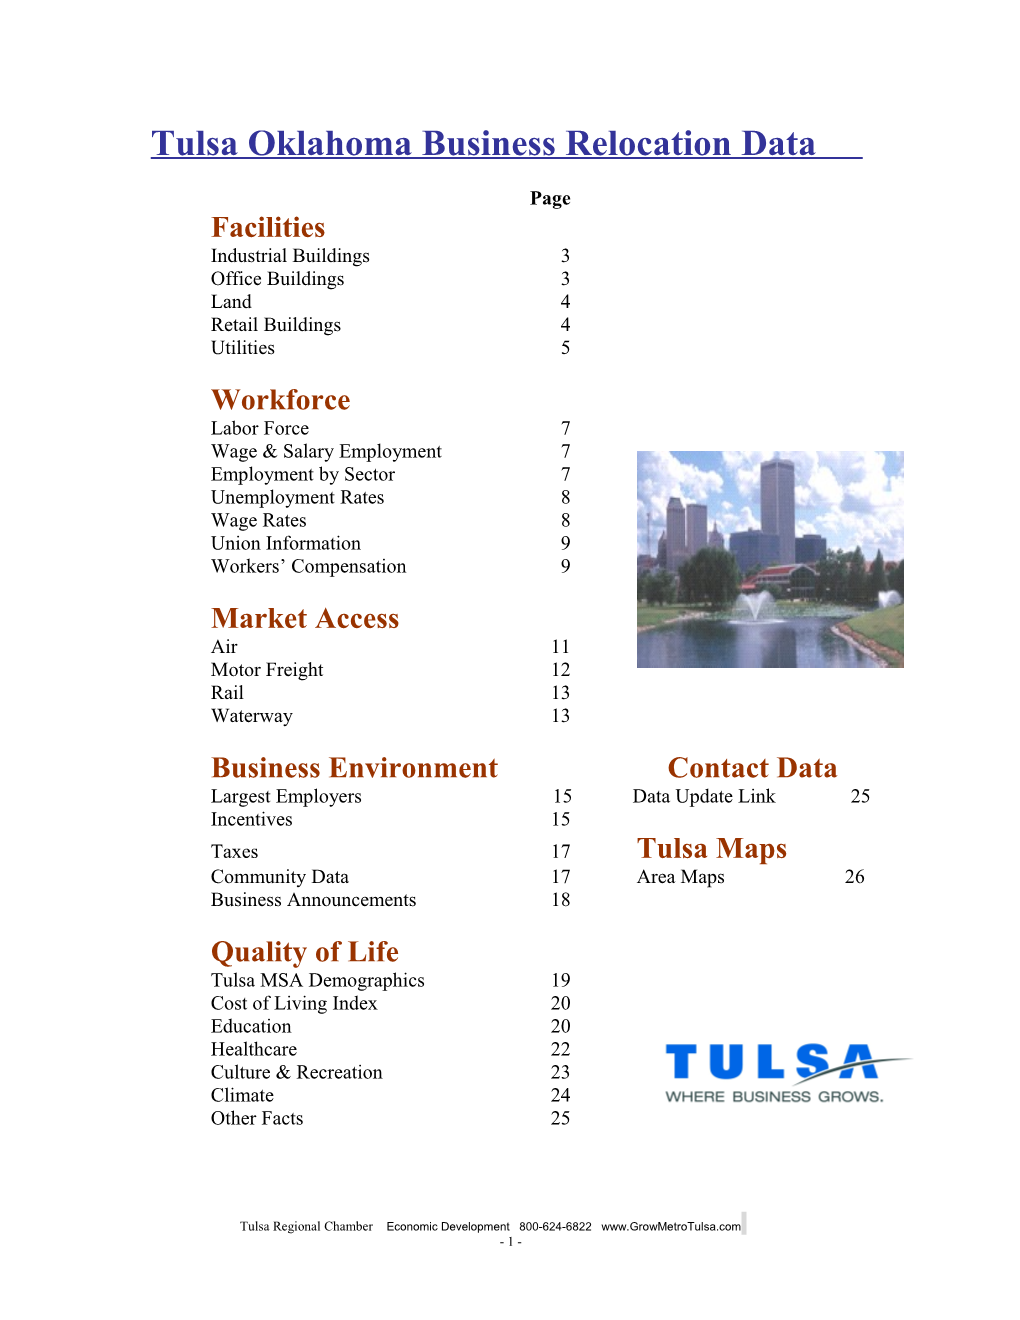 Tulsa Business Relocation Data